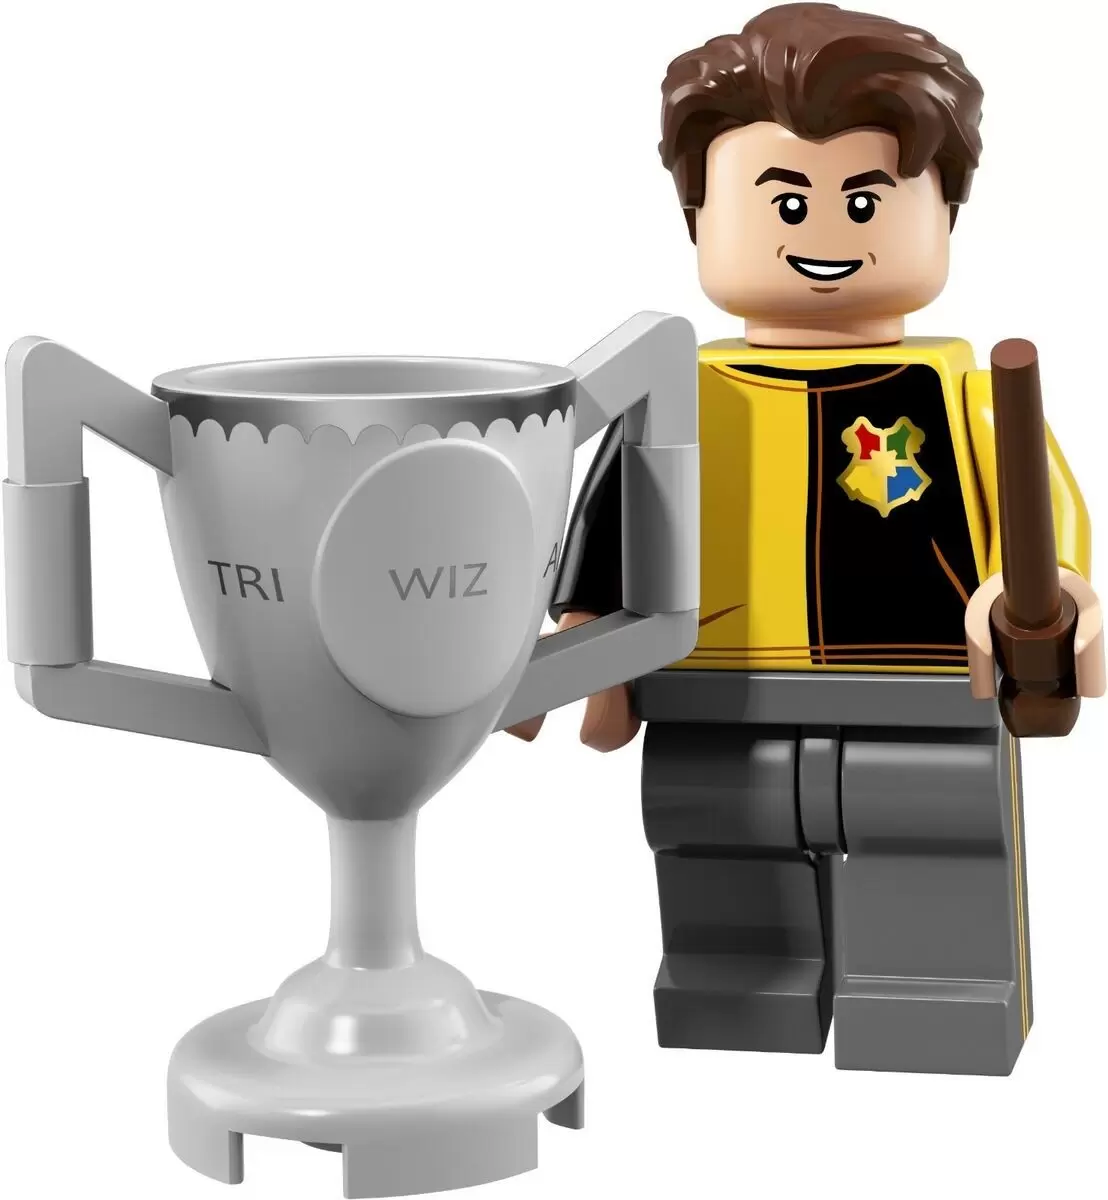 LEGO Minifigures : Wizarding World of Harry Potter - Cedric Diggory